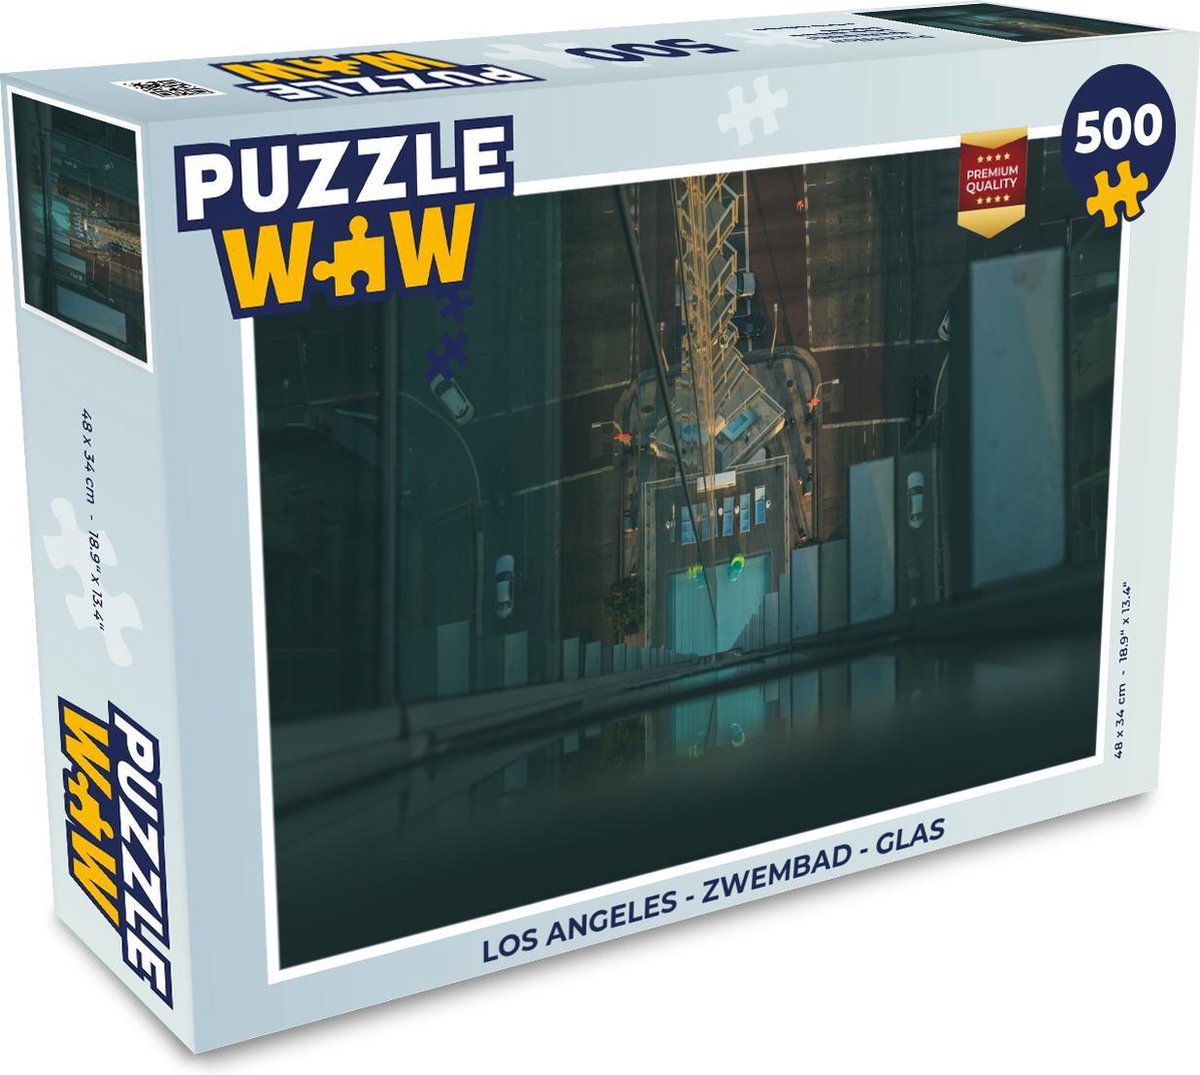 Afbeelding van product PuzzleWow  Puzzel Los Angeles - Zwembad - Glas - Legpuzzel - Puzzel 500 stukjes